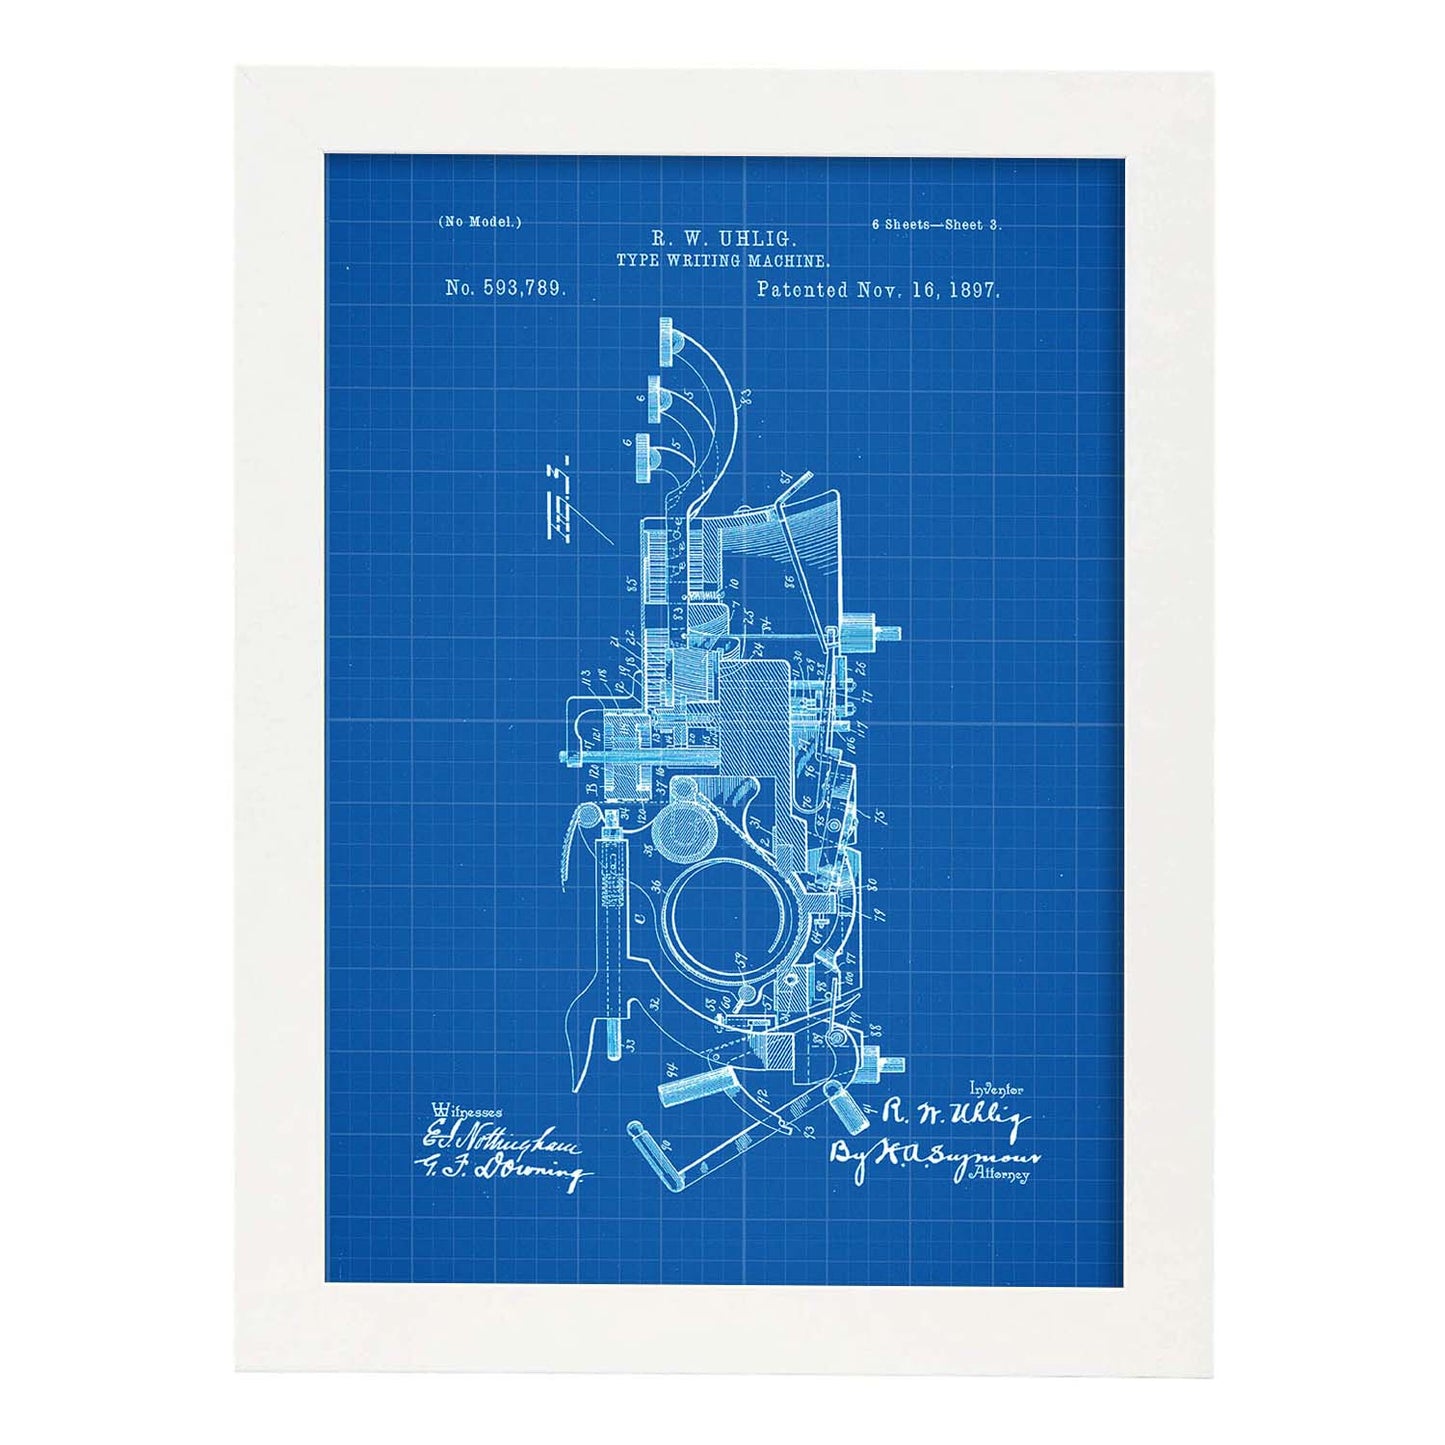 Poster con patente de Maquina de escribir 2. Lámina con diseño de patente antigua-Artwork-Nacnic-A4-Marco Blanco-Nacnic Estudio SL